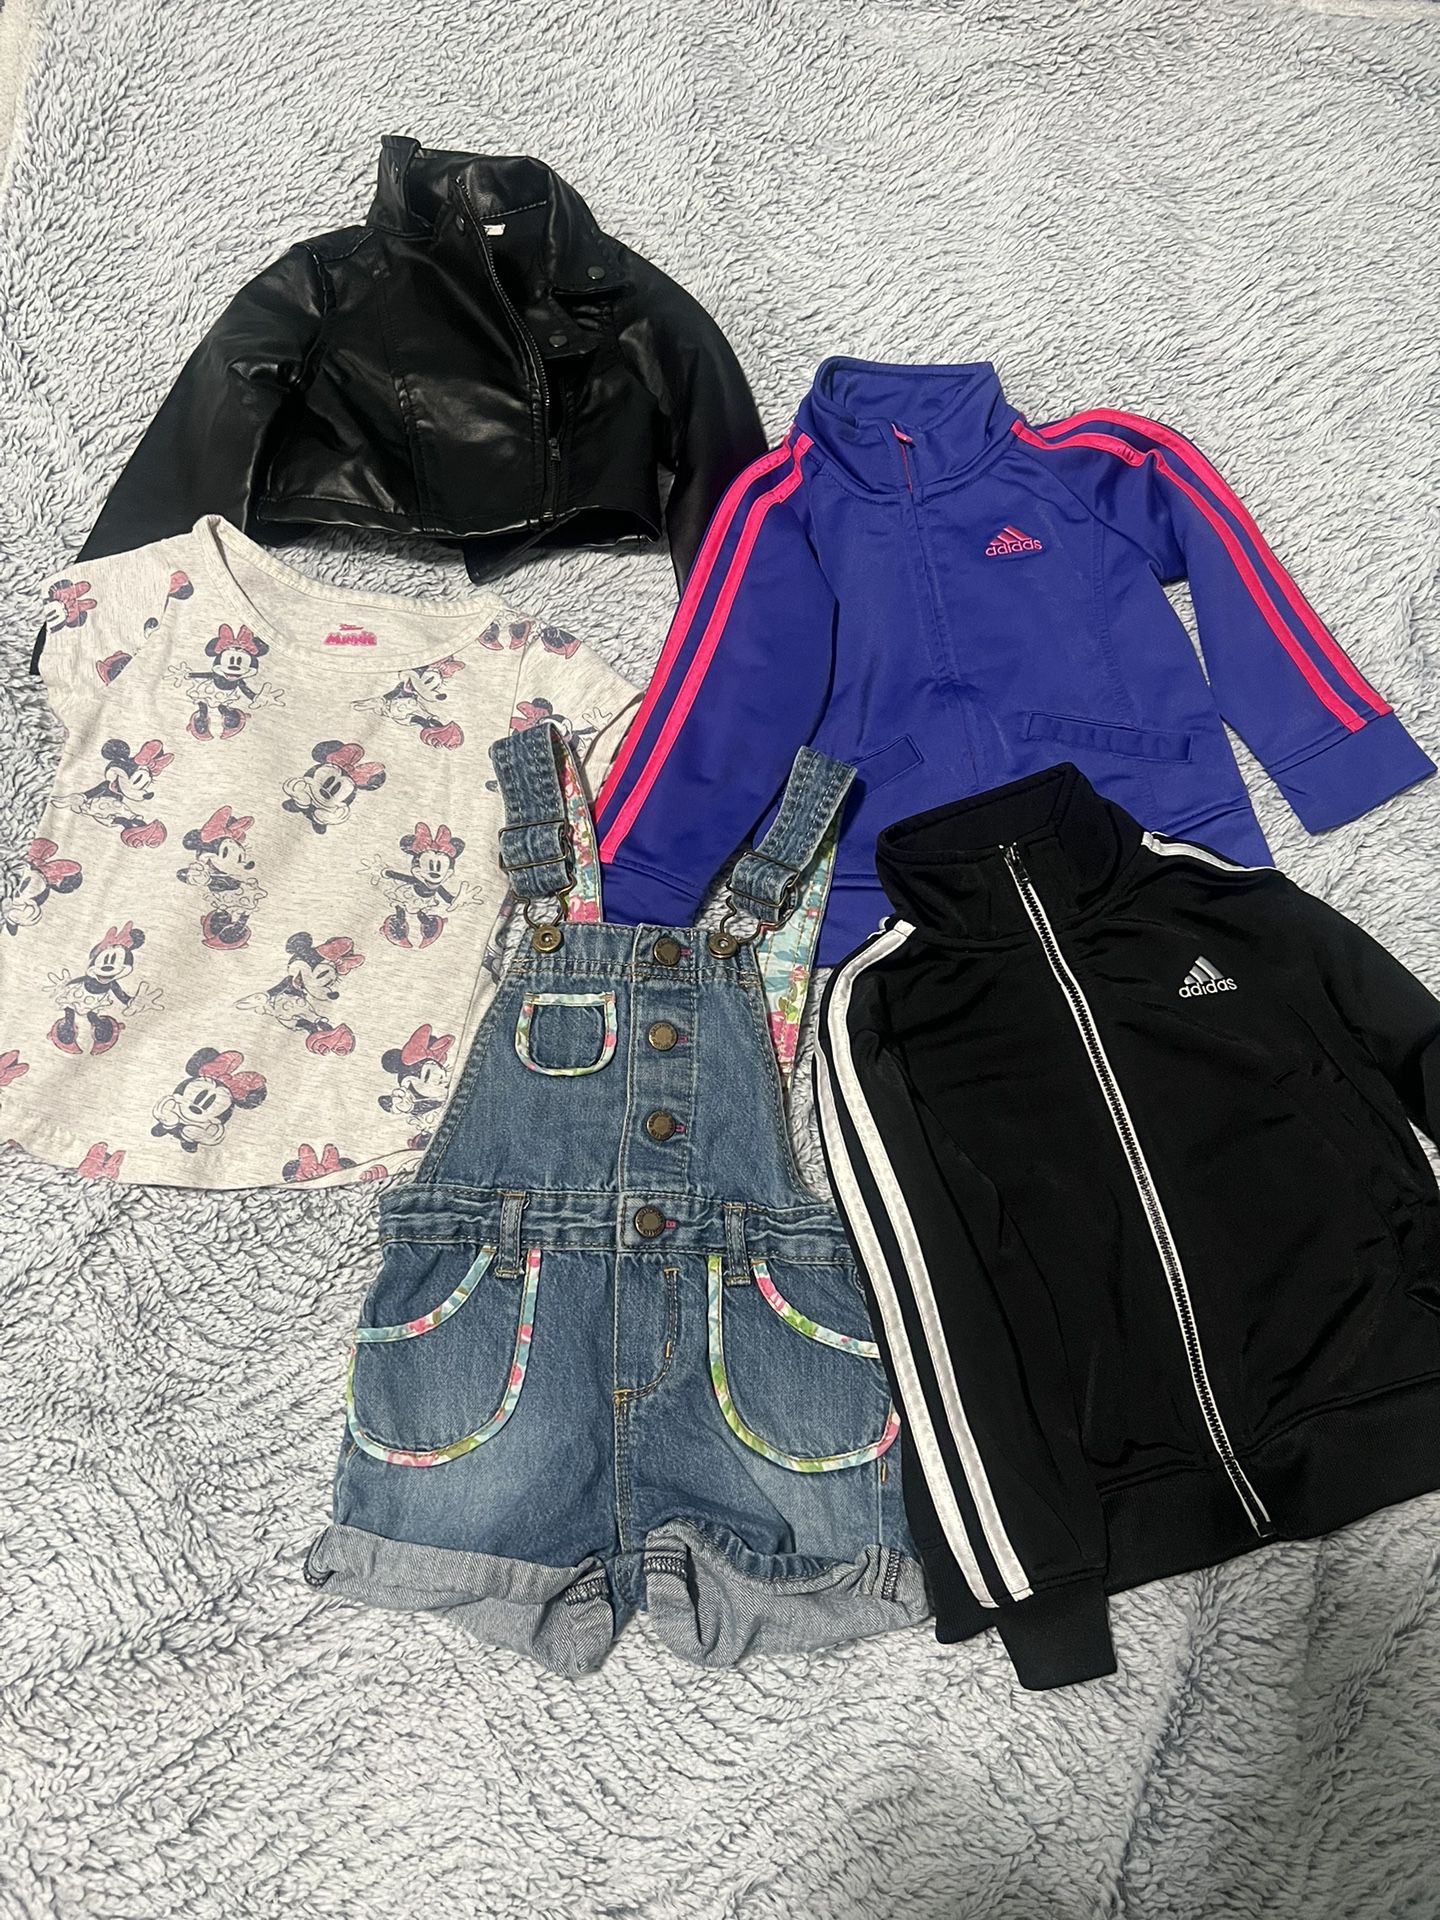 Girl Adidas Jacket Size 2t Bundle for Sale Arrowhed Farm, OfferUp